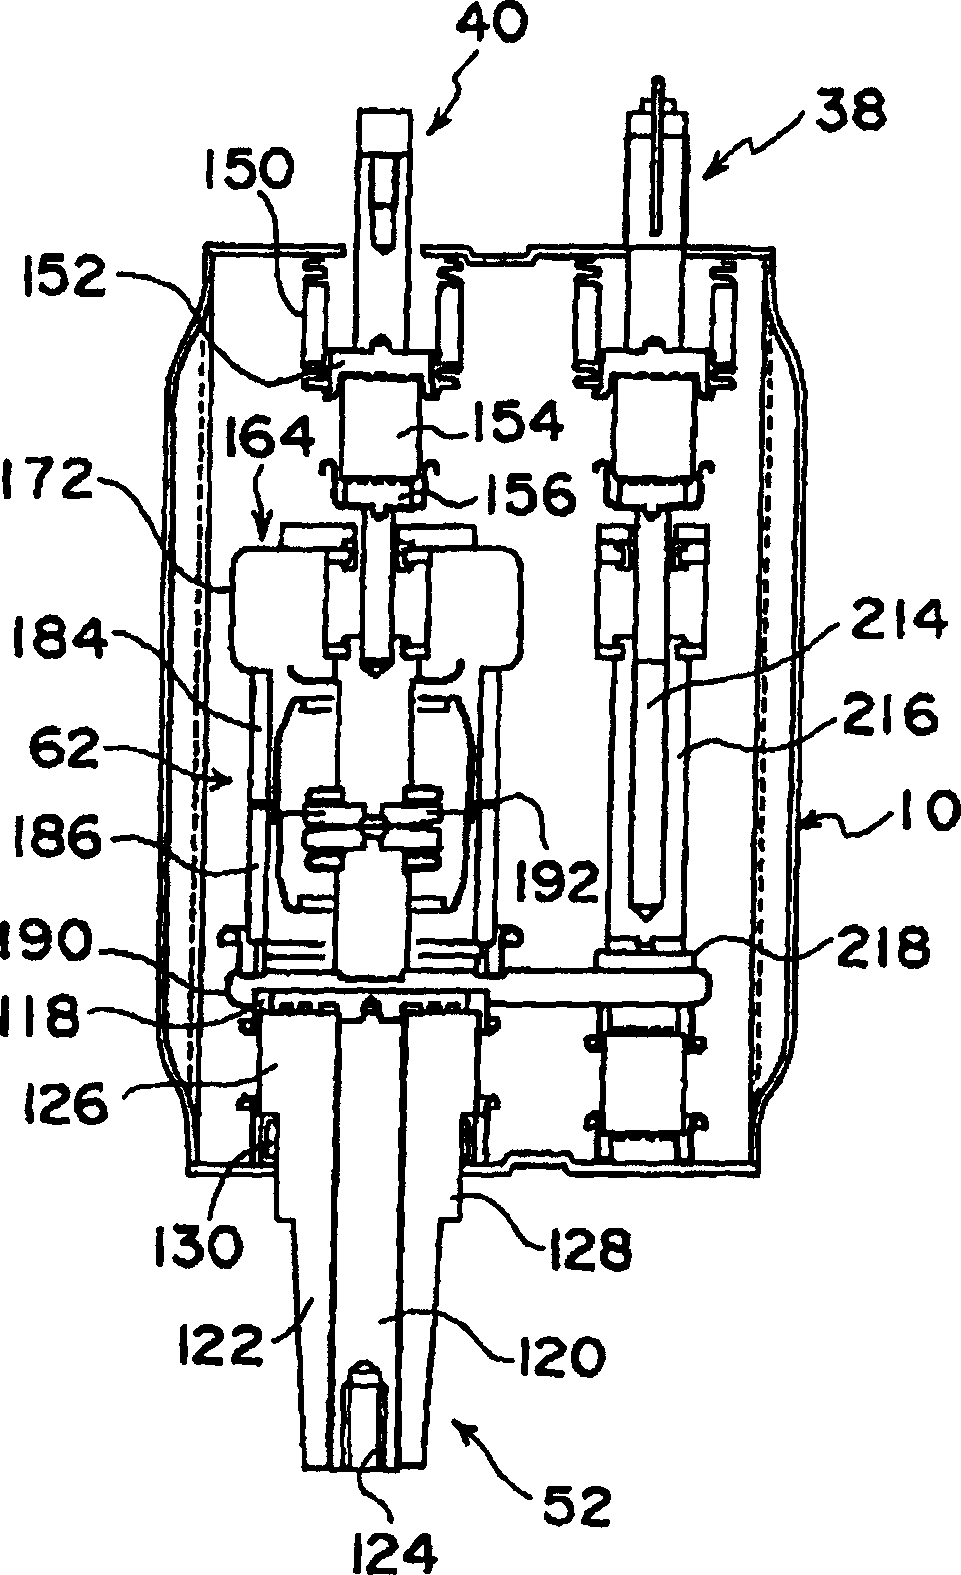 Vacuum switchgear